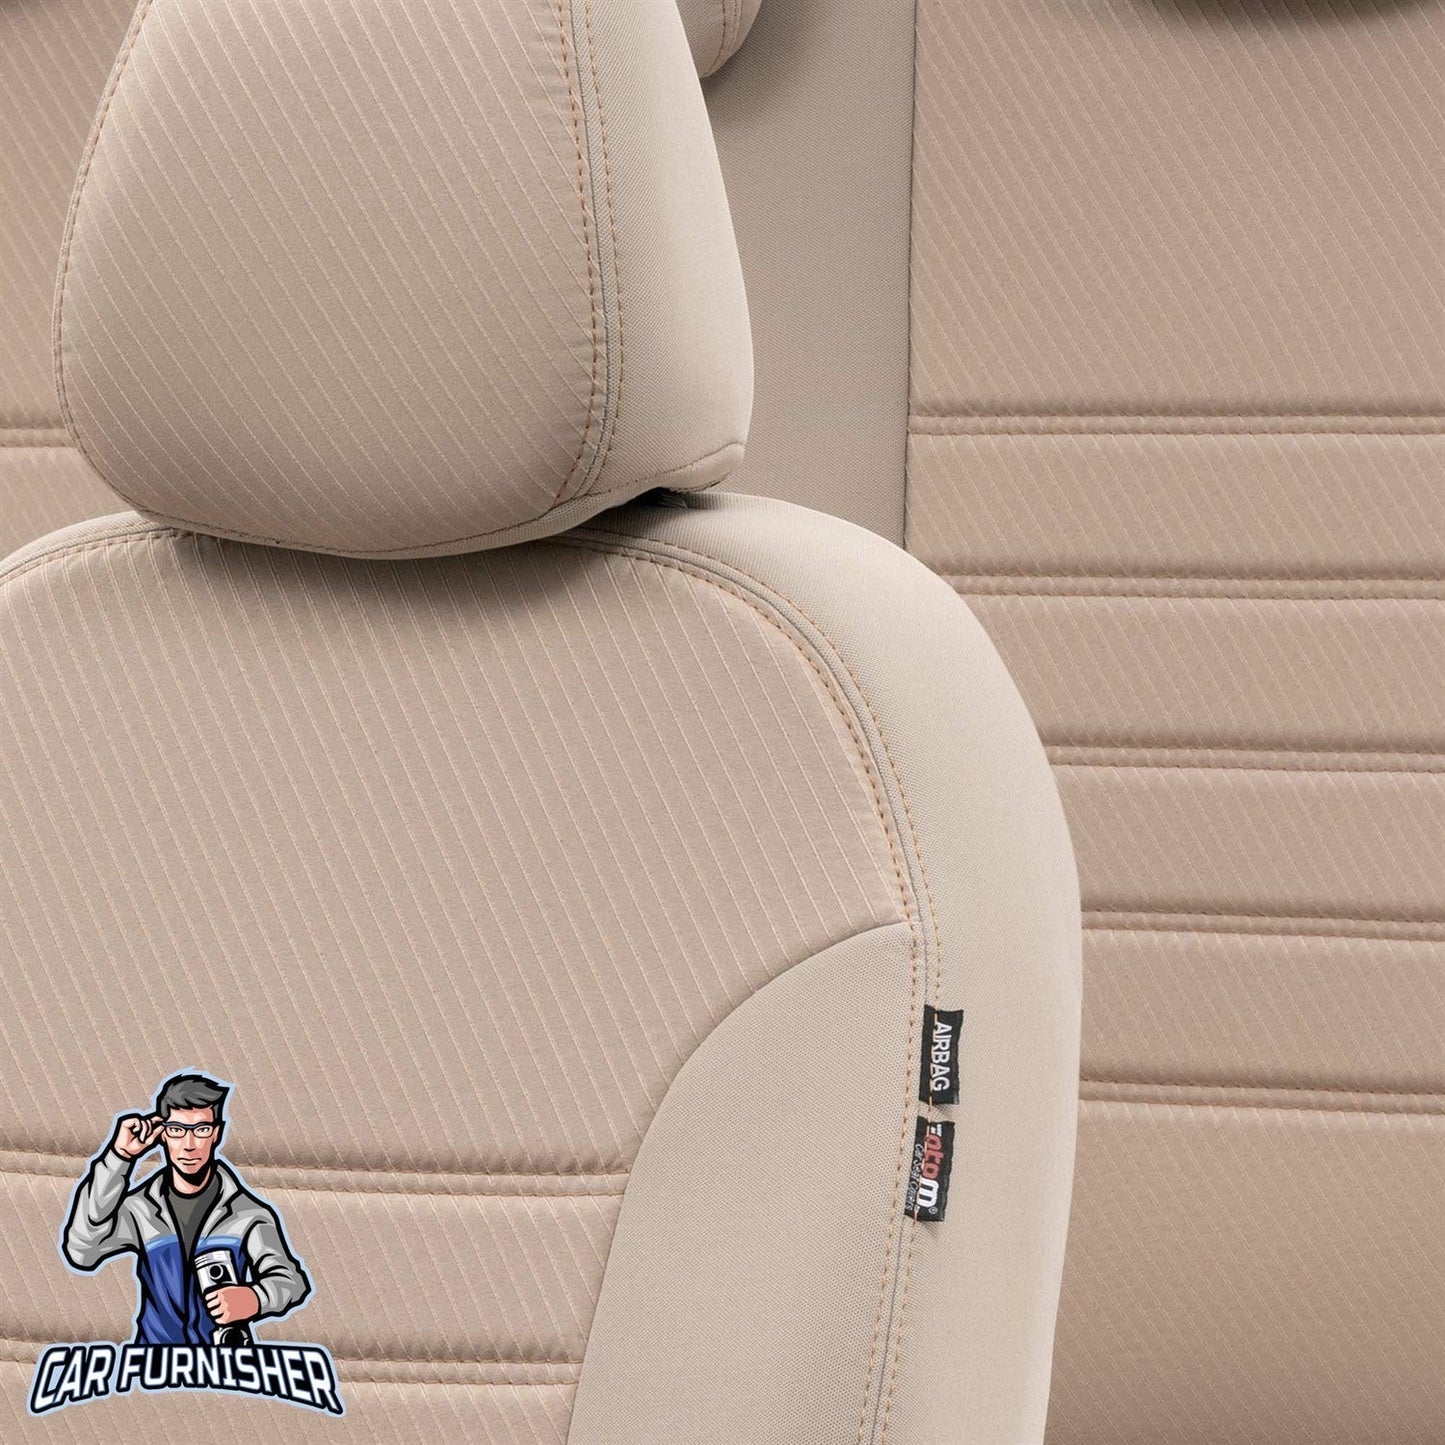 Toyota Camry Seat Cover Original Jacquard Design Dark Beige Jacquard Fabric